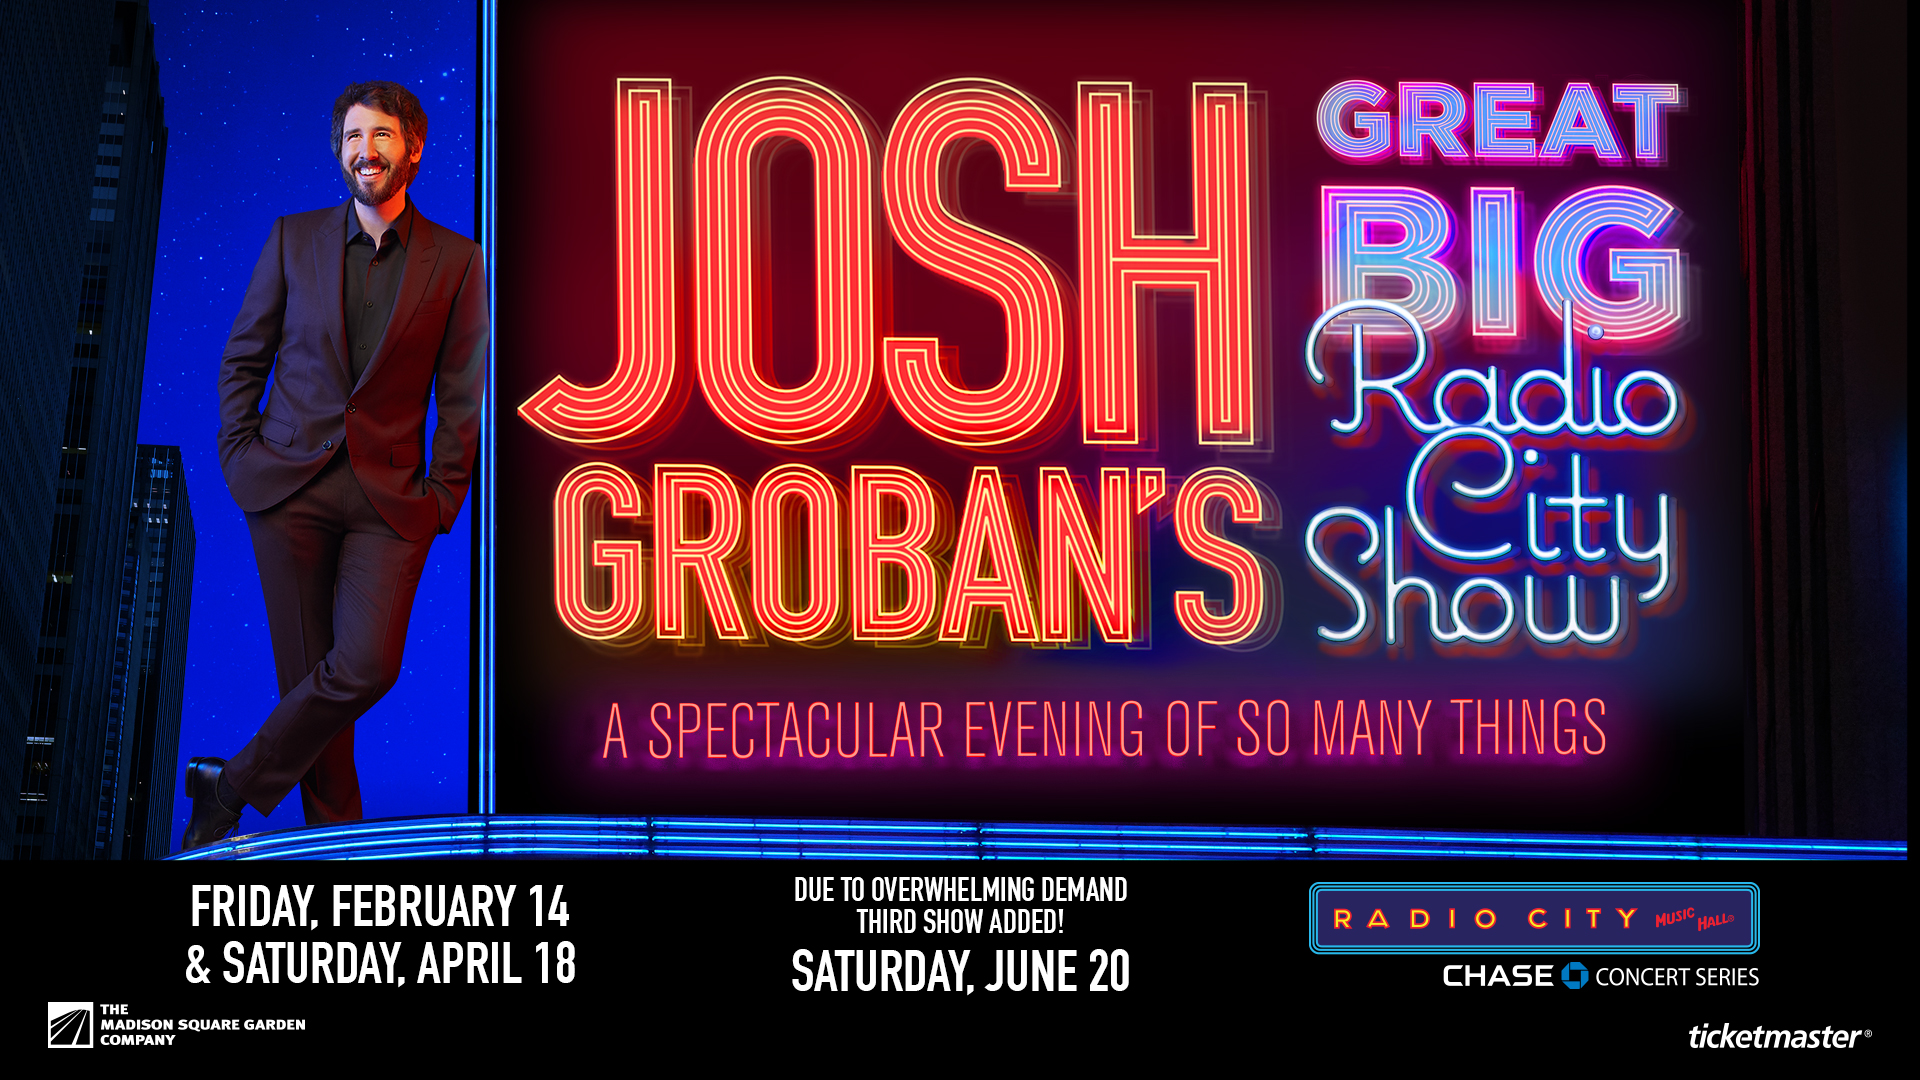 THIRD SHOW ADDED - Josh's Great Big Radio City Show!